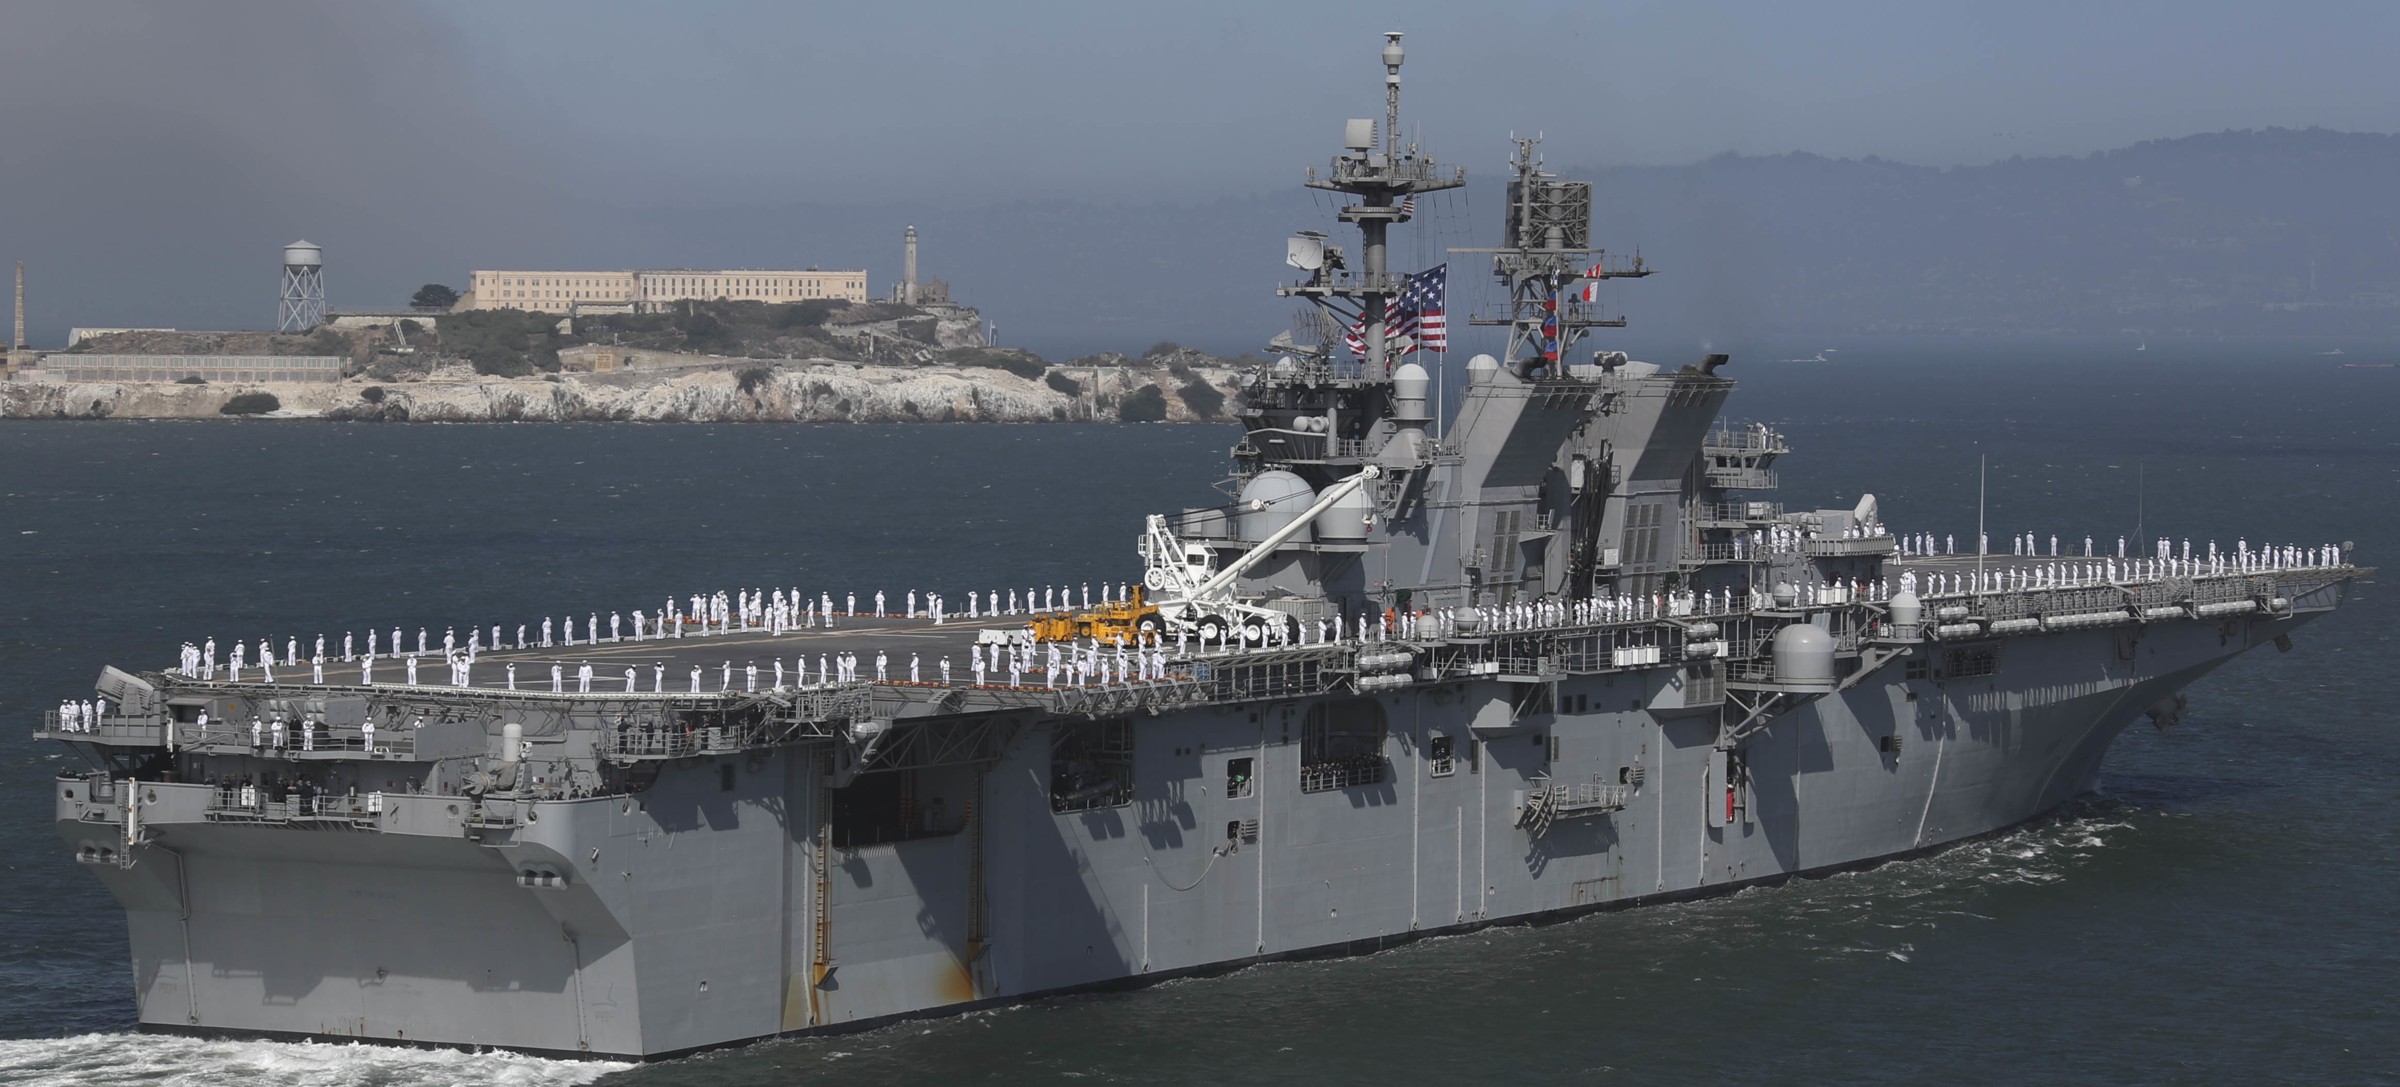 lha-7 uss tripoli america class amphibious assault ship us navy 29 fleet week san francisco california